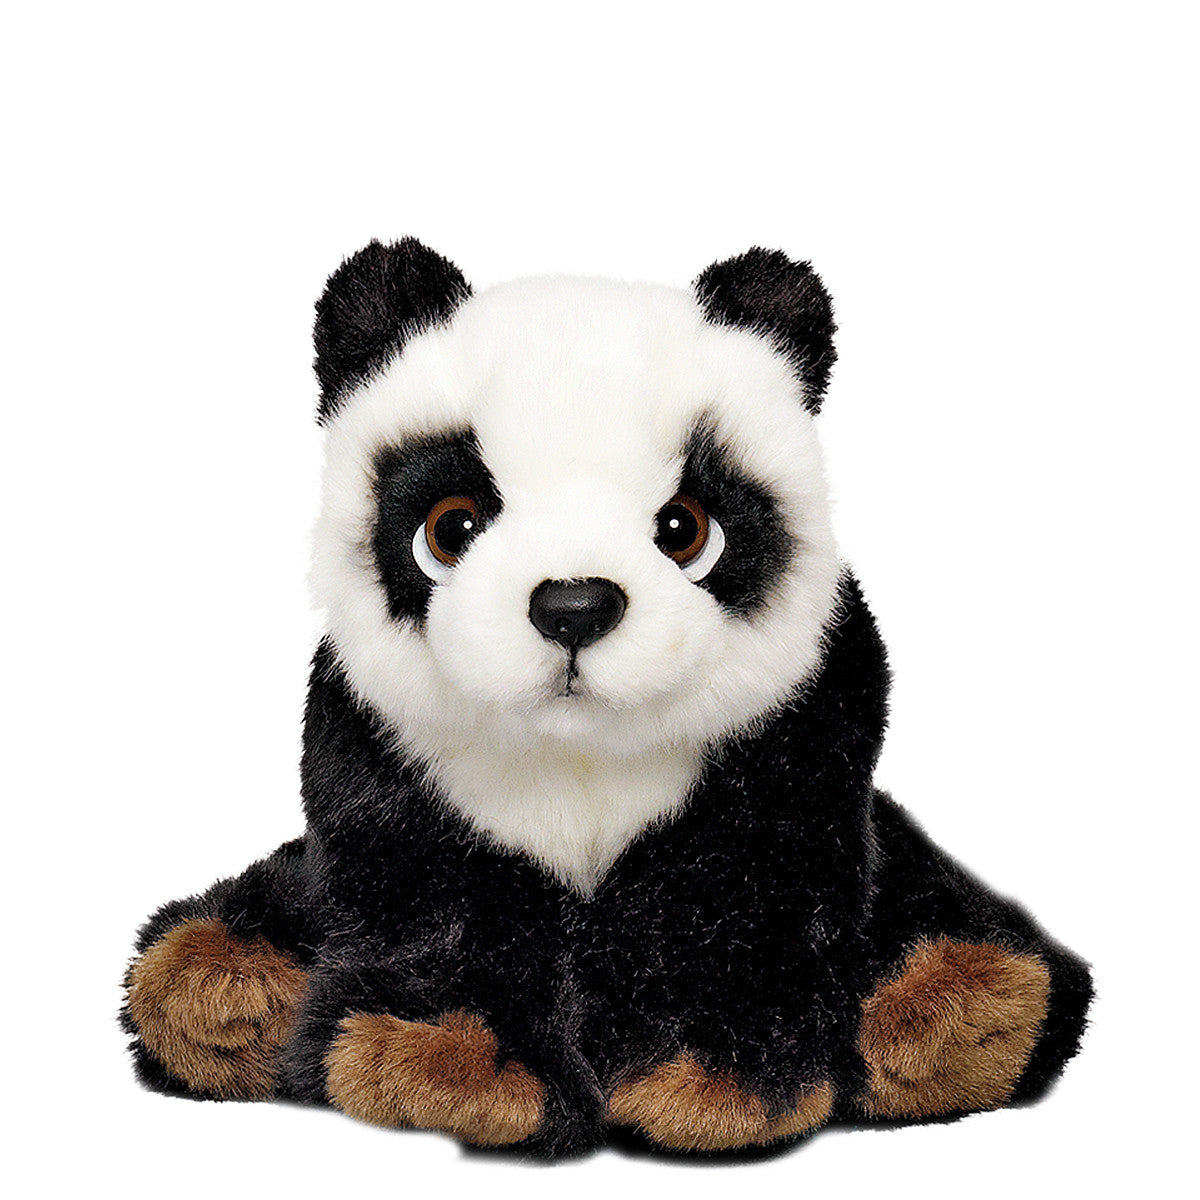 Panda géant - WWF-Canada